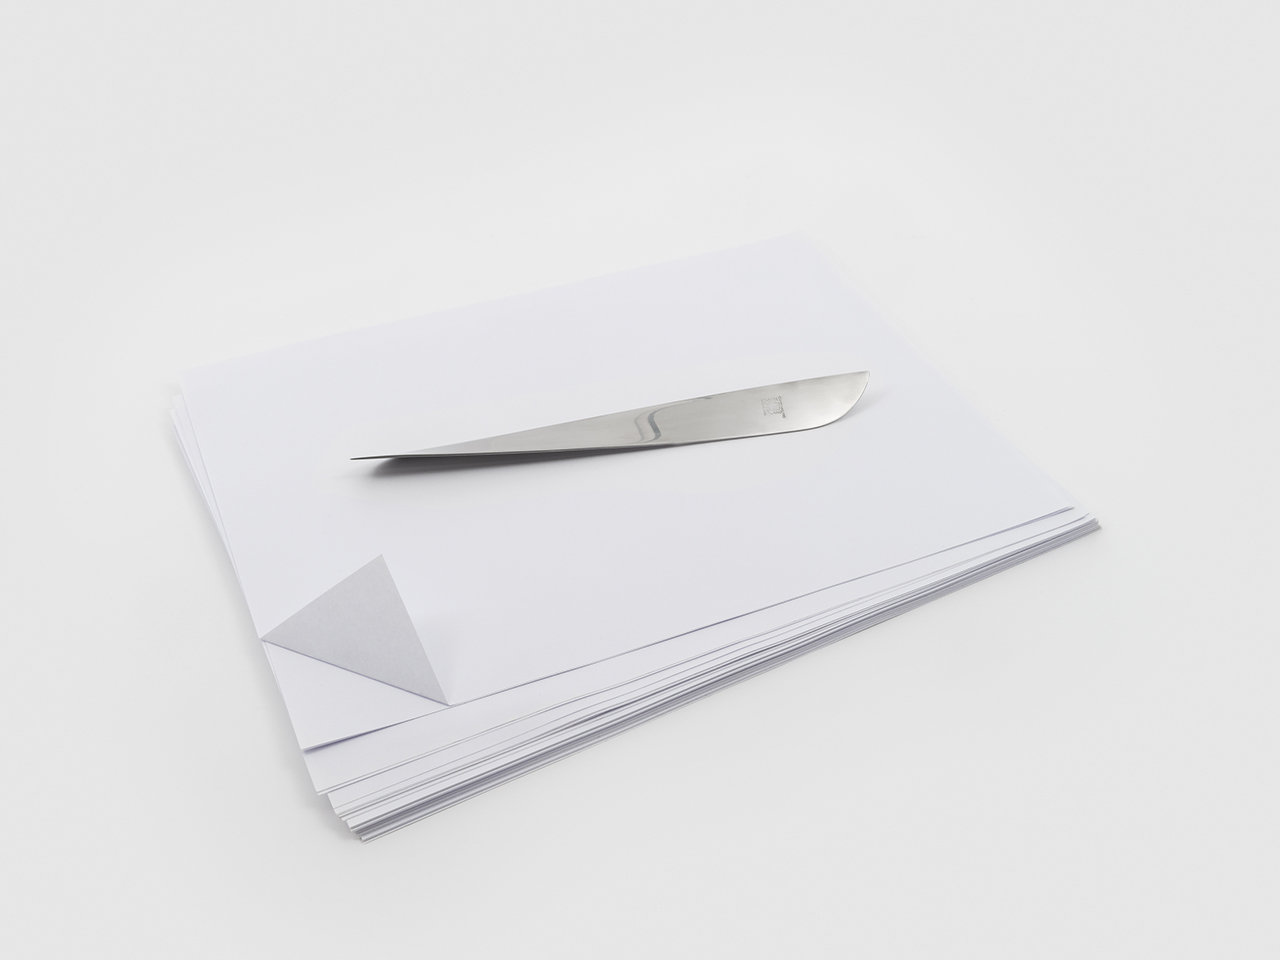 Enzo Mari Paper knife AMELAND by Danese